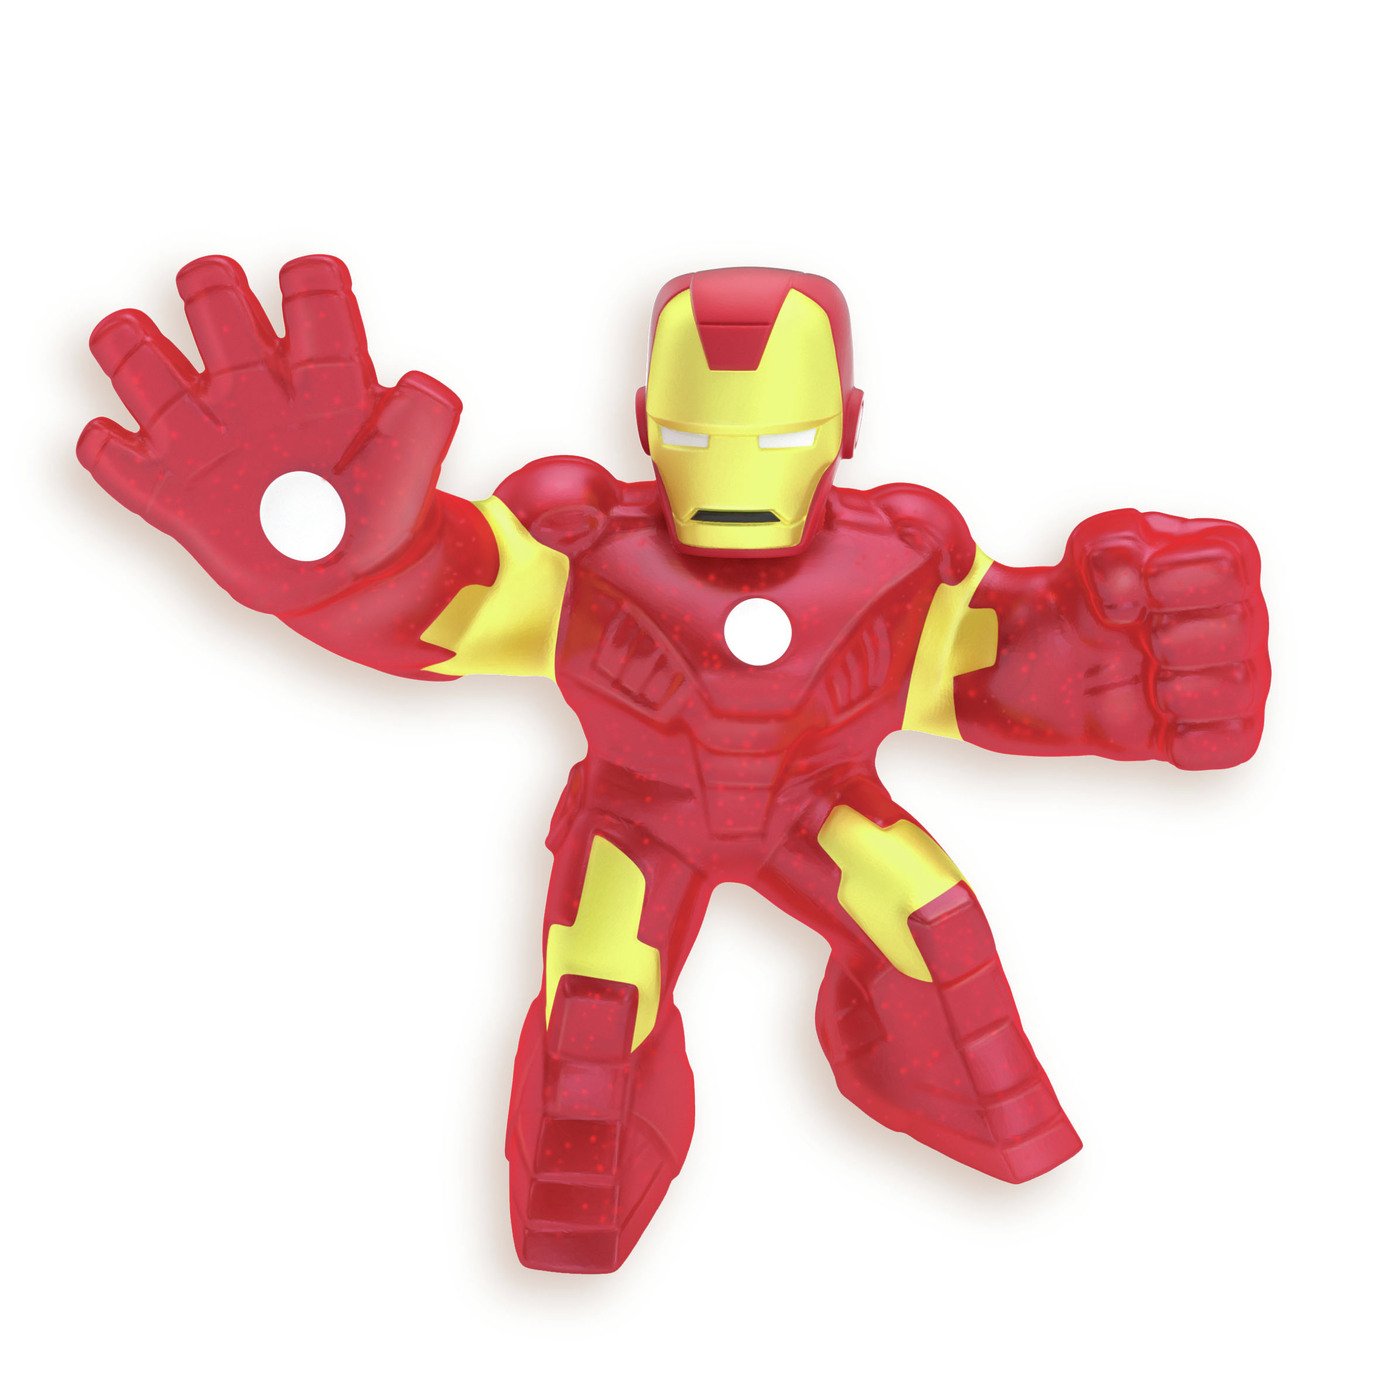 Goo Jit Zu Marvel Superheroes Iron Man Figure Review